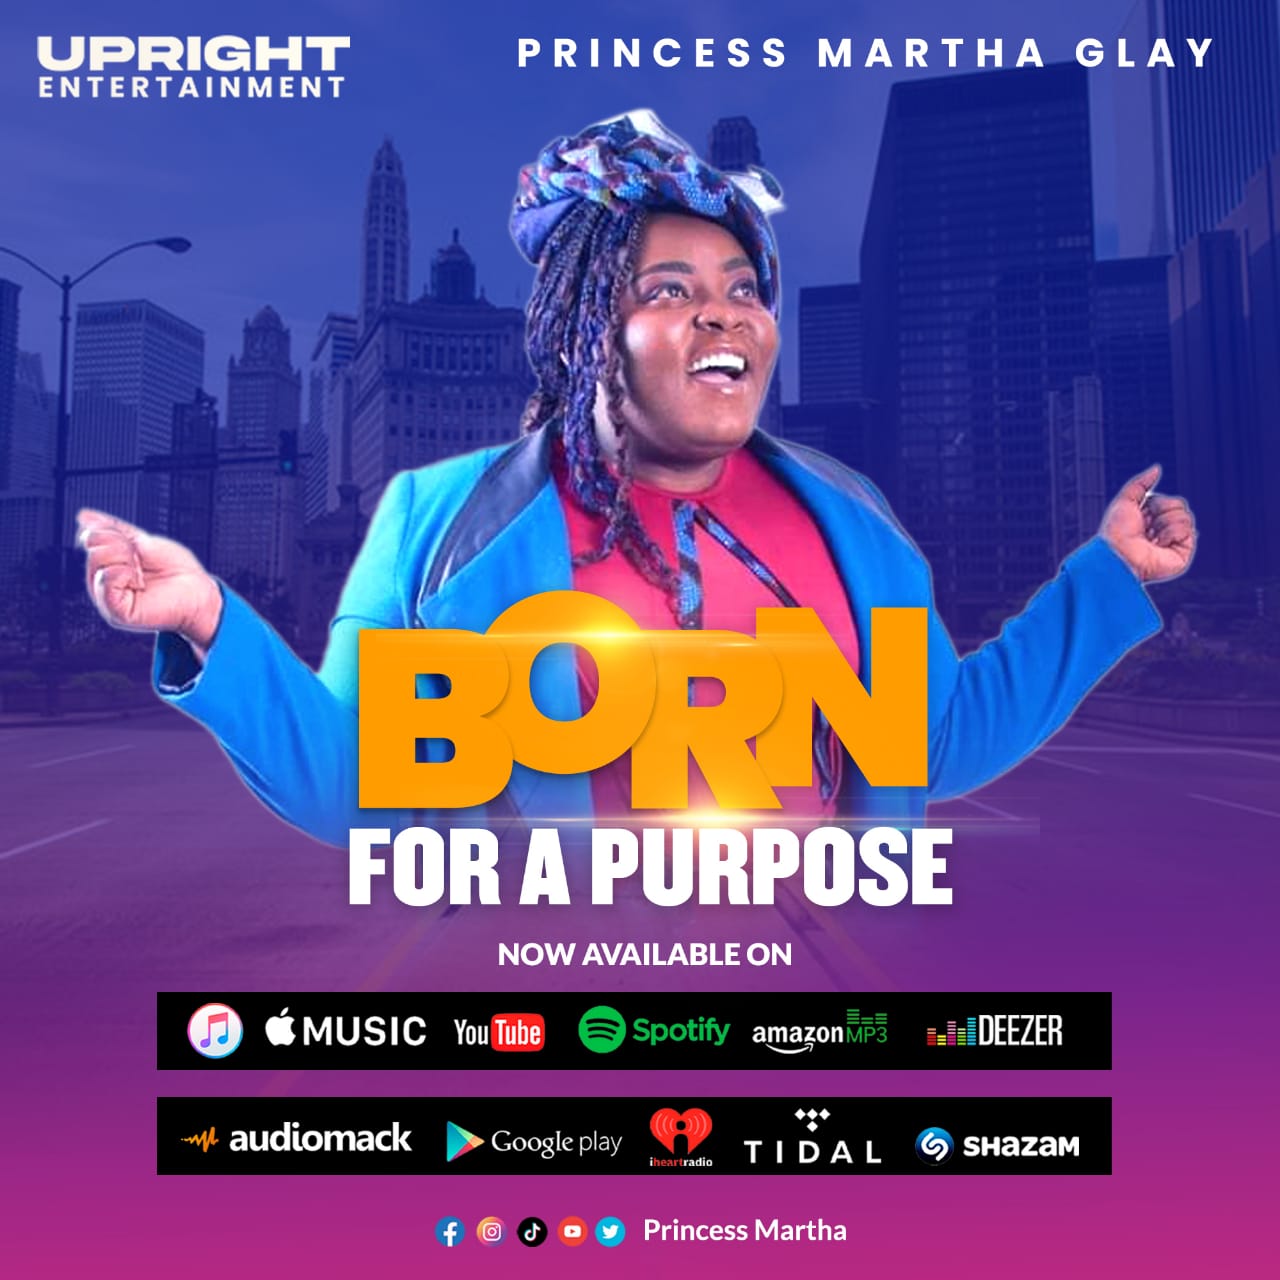 BORN FOR A PURPOSE - Princess Martha Glay